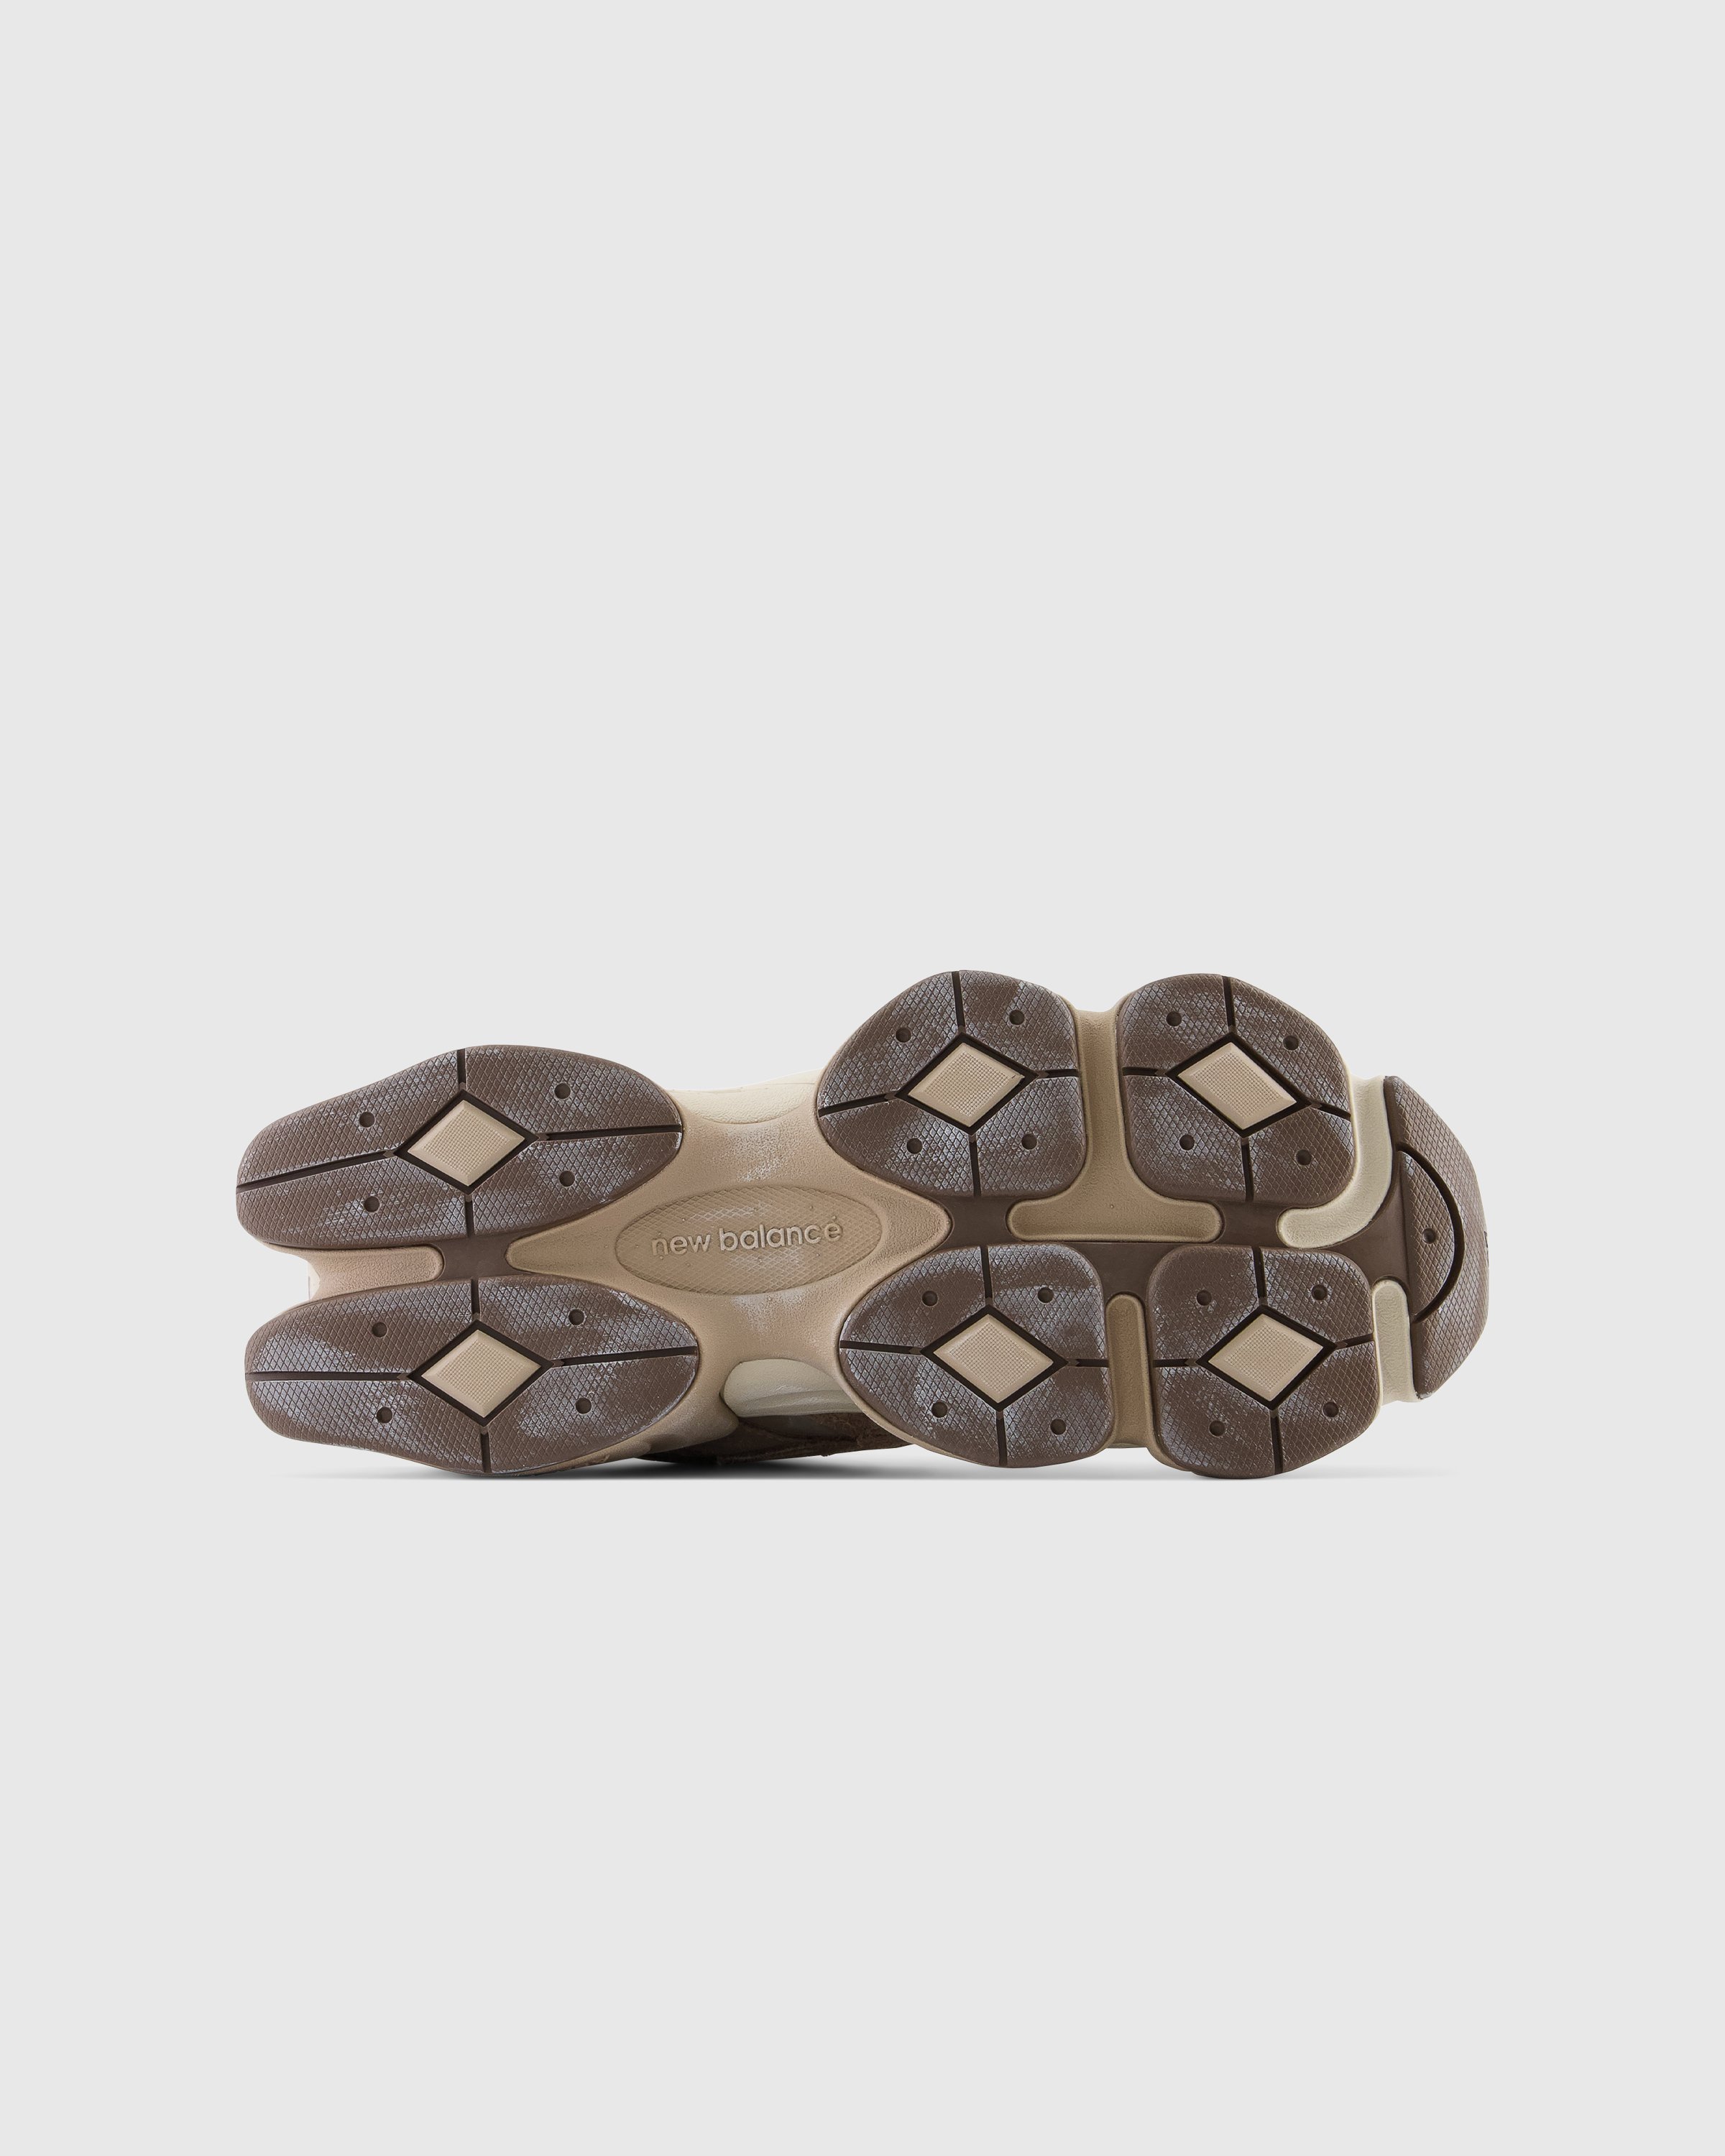 New Balance - U 9060 PB Mushroom - Footwear - Brown - Image 5